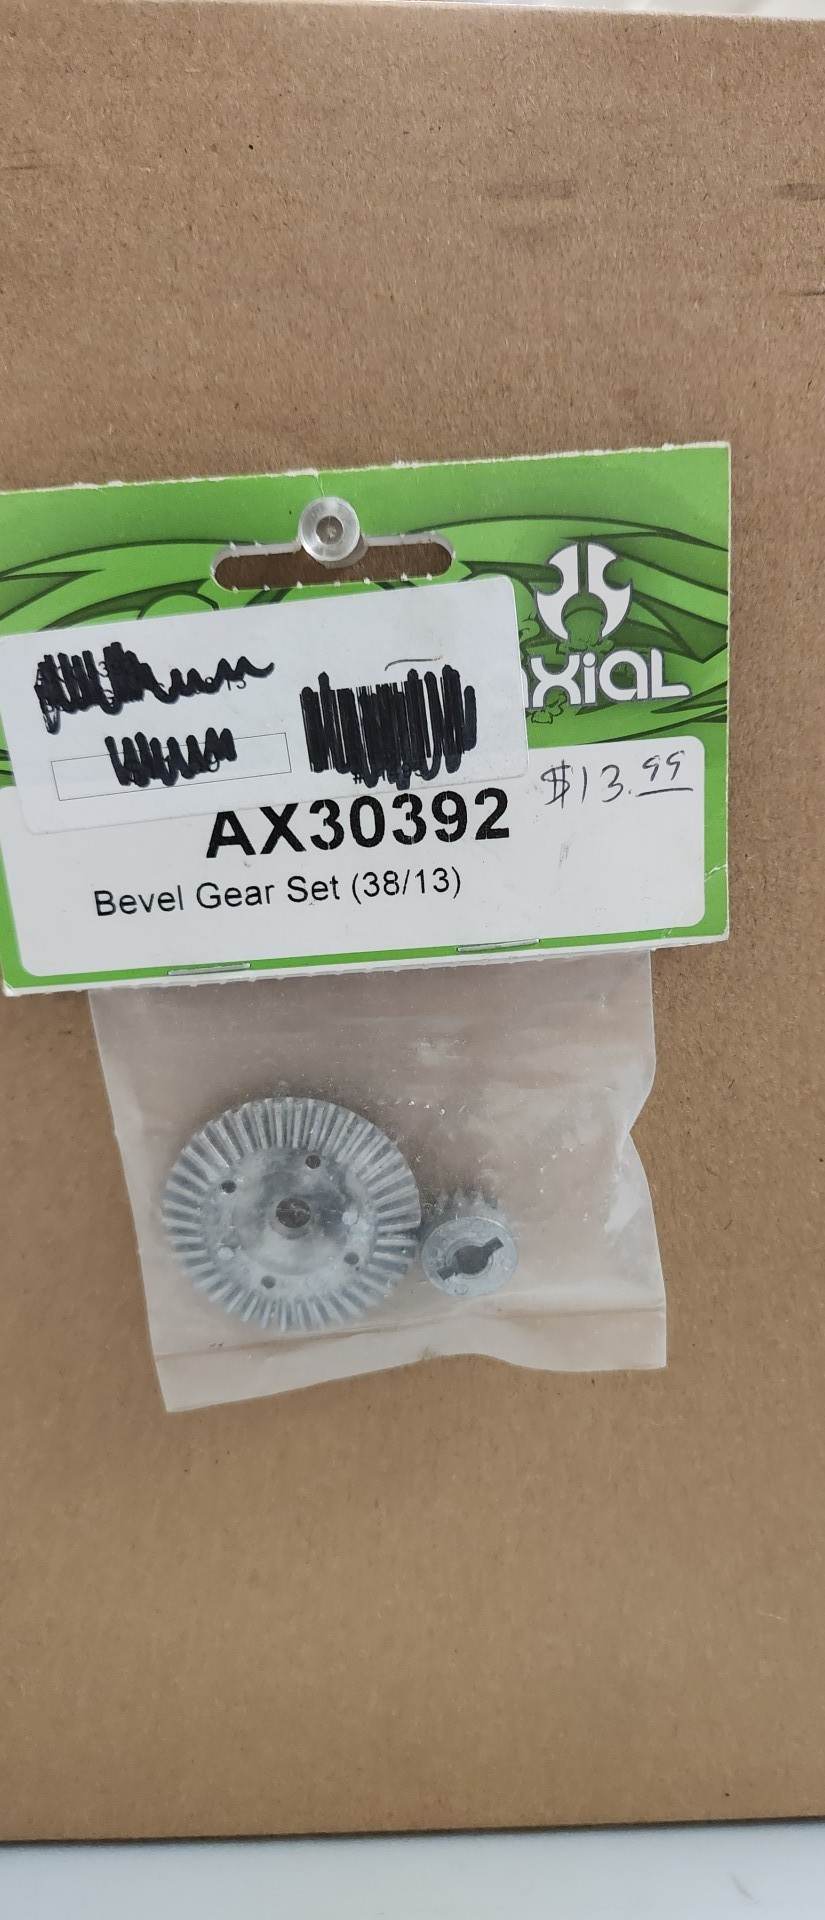 Axial ax30392 Bevel Gear Set 38/13